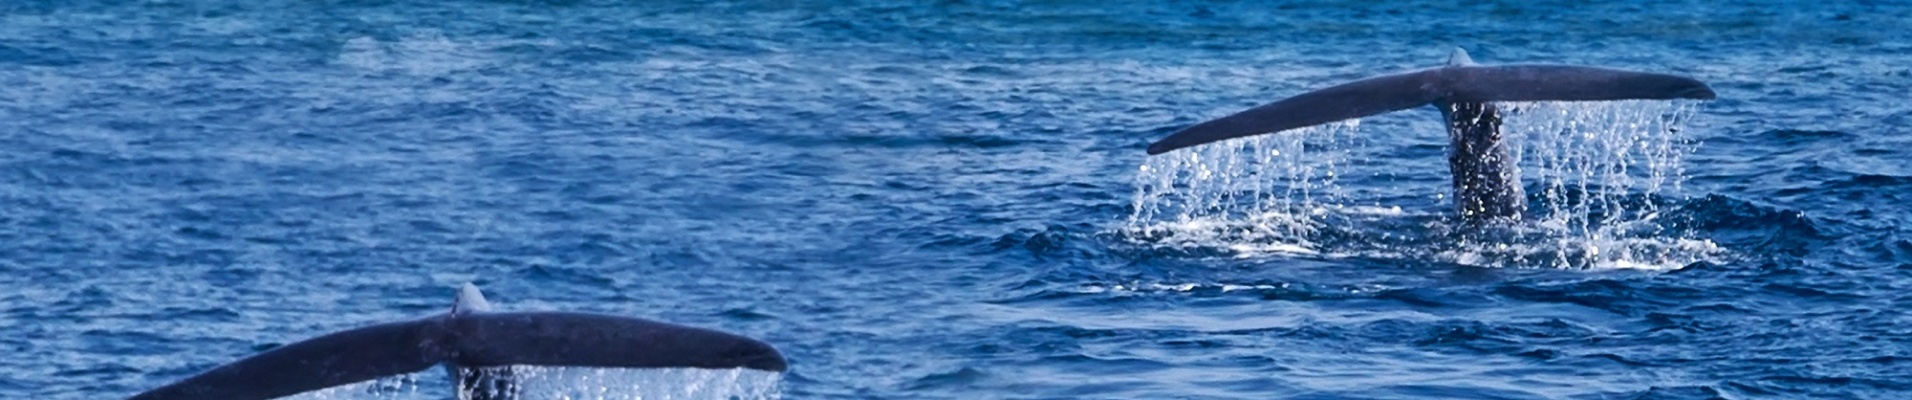 Queues de baleine sortant de la mer